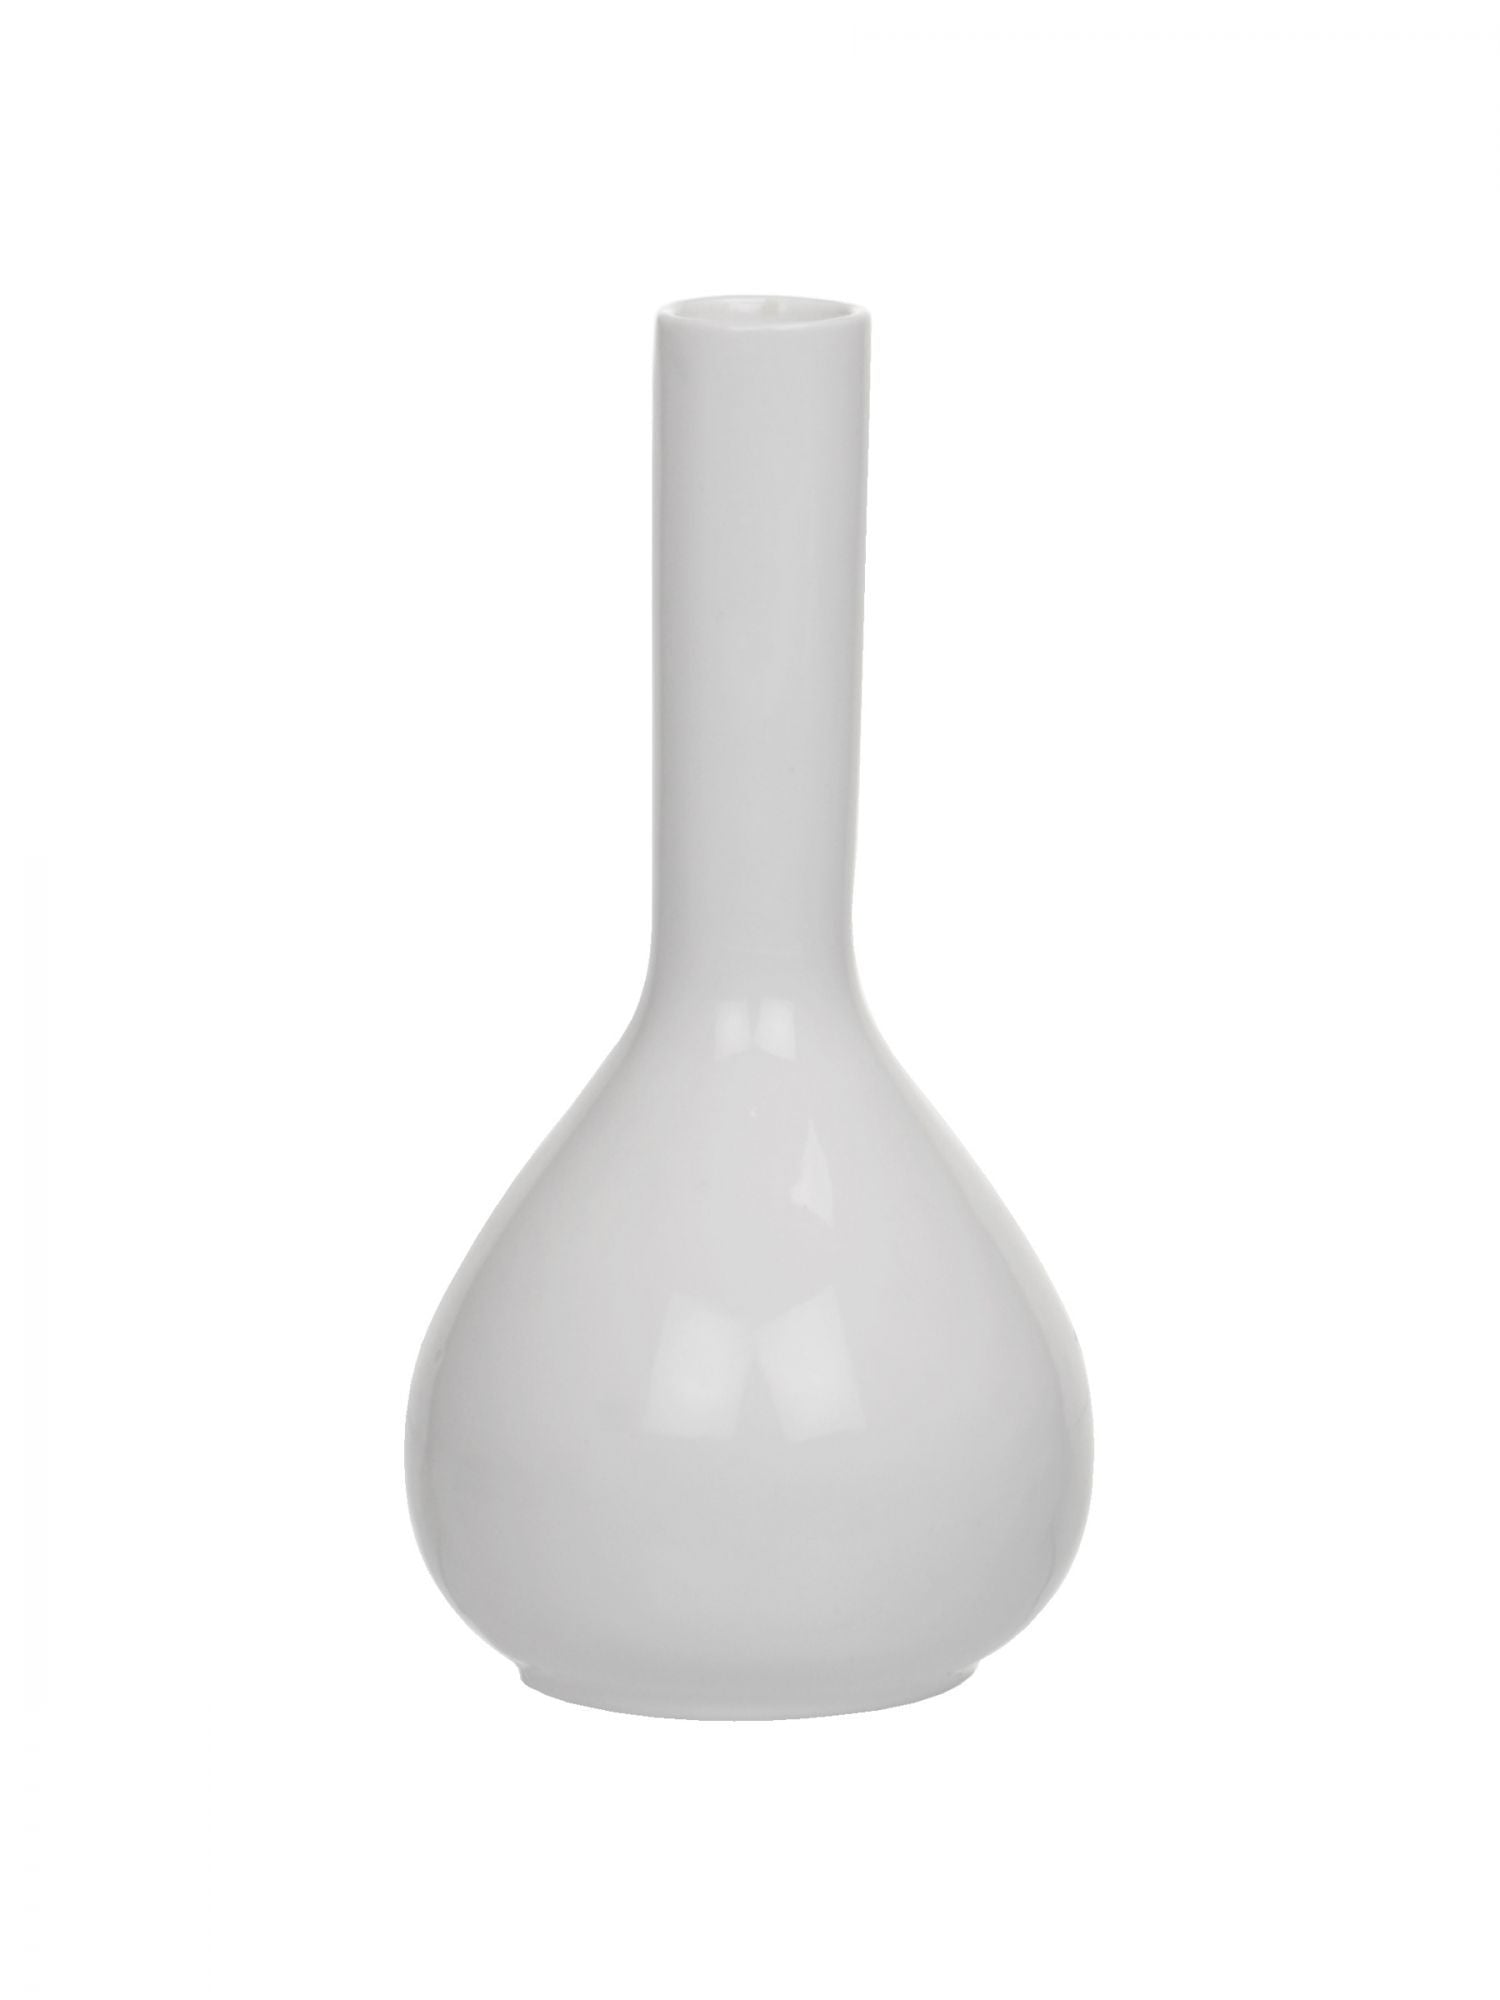 Clay Craft Basics Budvase High White Textured Ceramic Vase - Clay Craft India